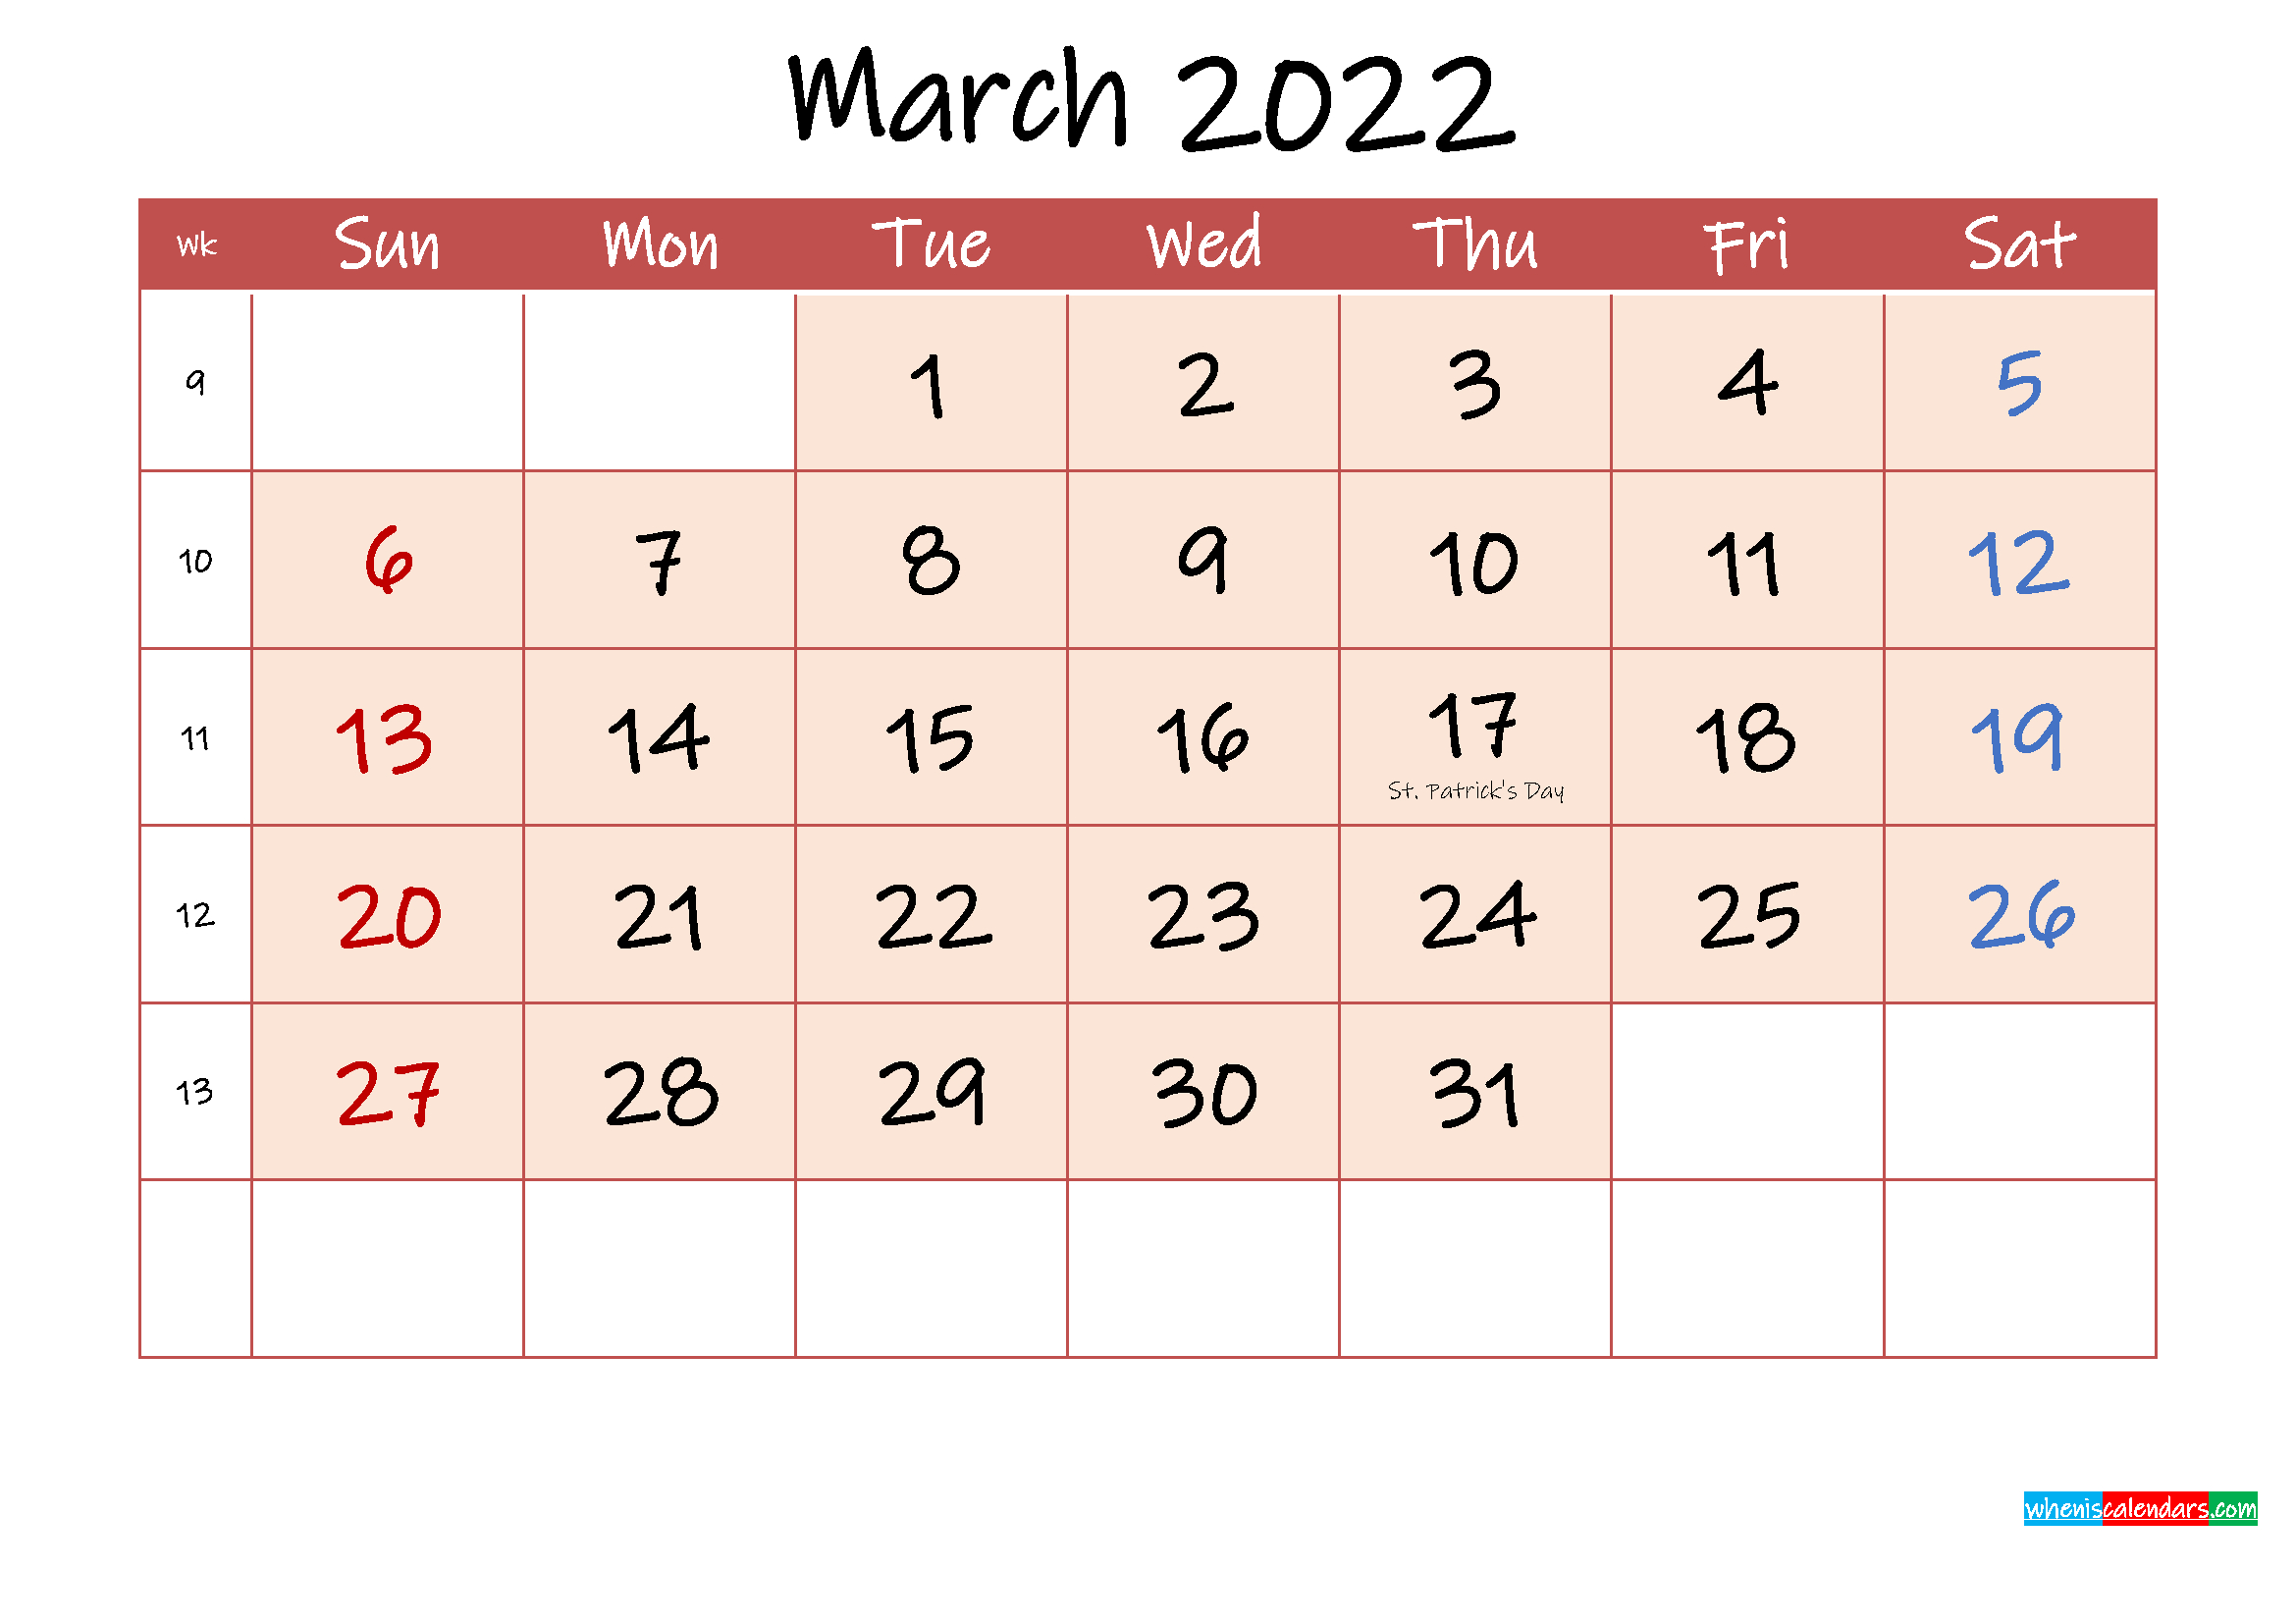 Get March 2022 Calendar Image